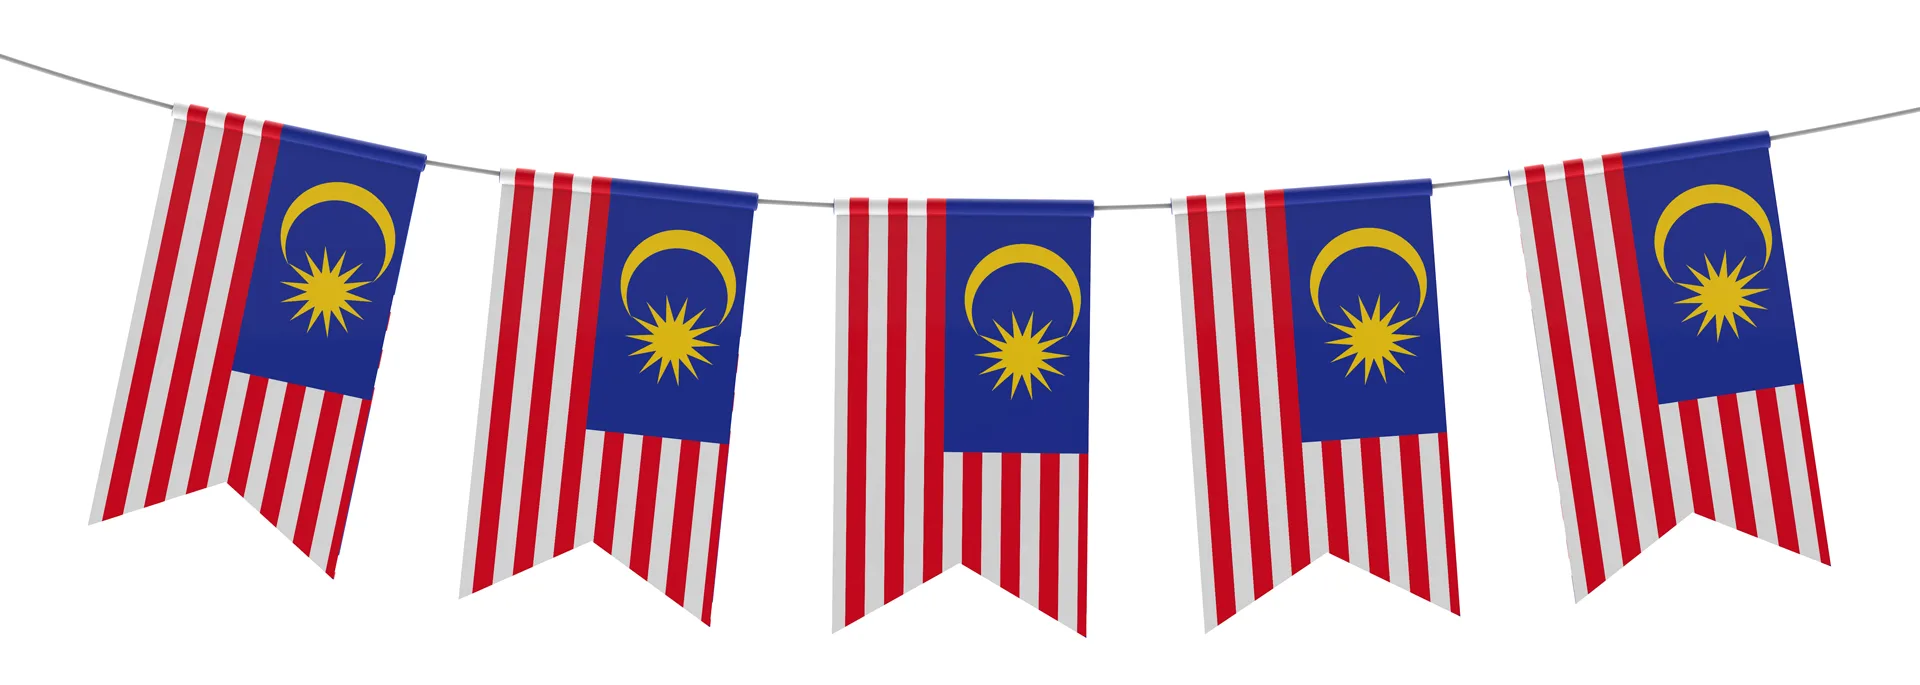 malaysia national flag festive bunting against plain white background 3d rendering jpg